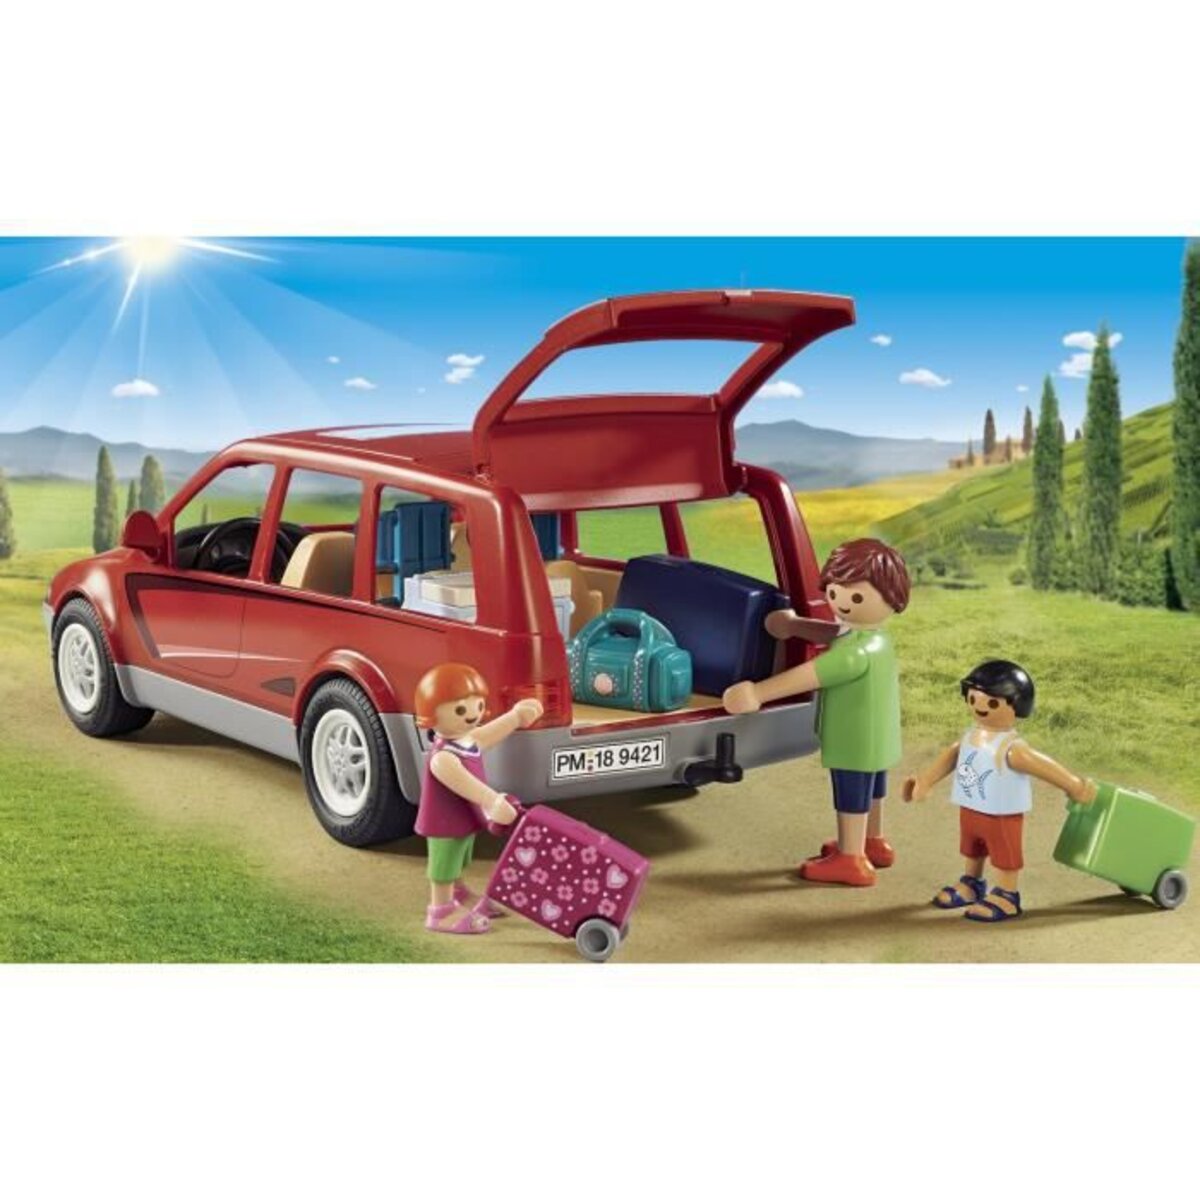 Famille avec voiture Playmobil - 9421 